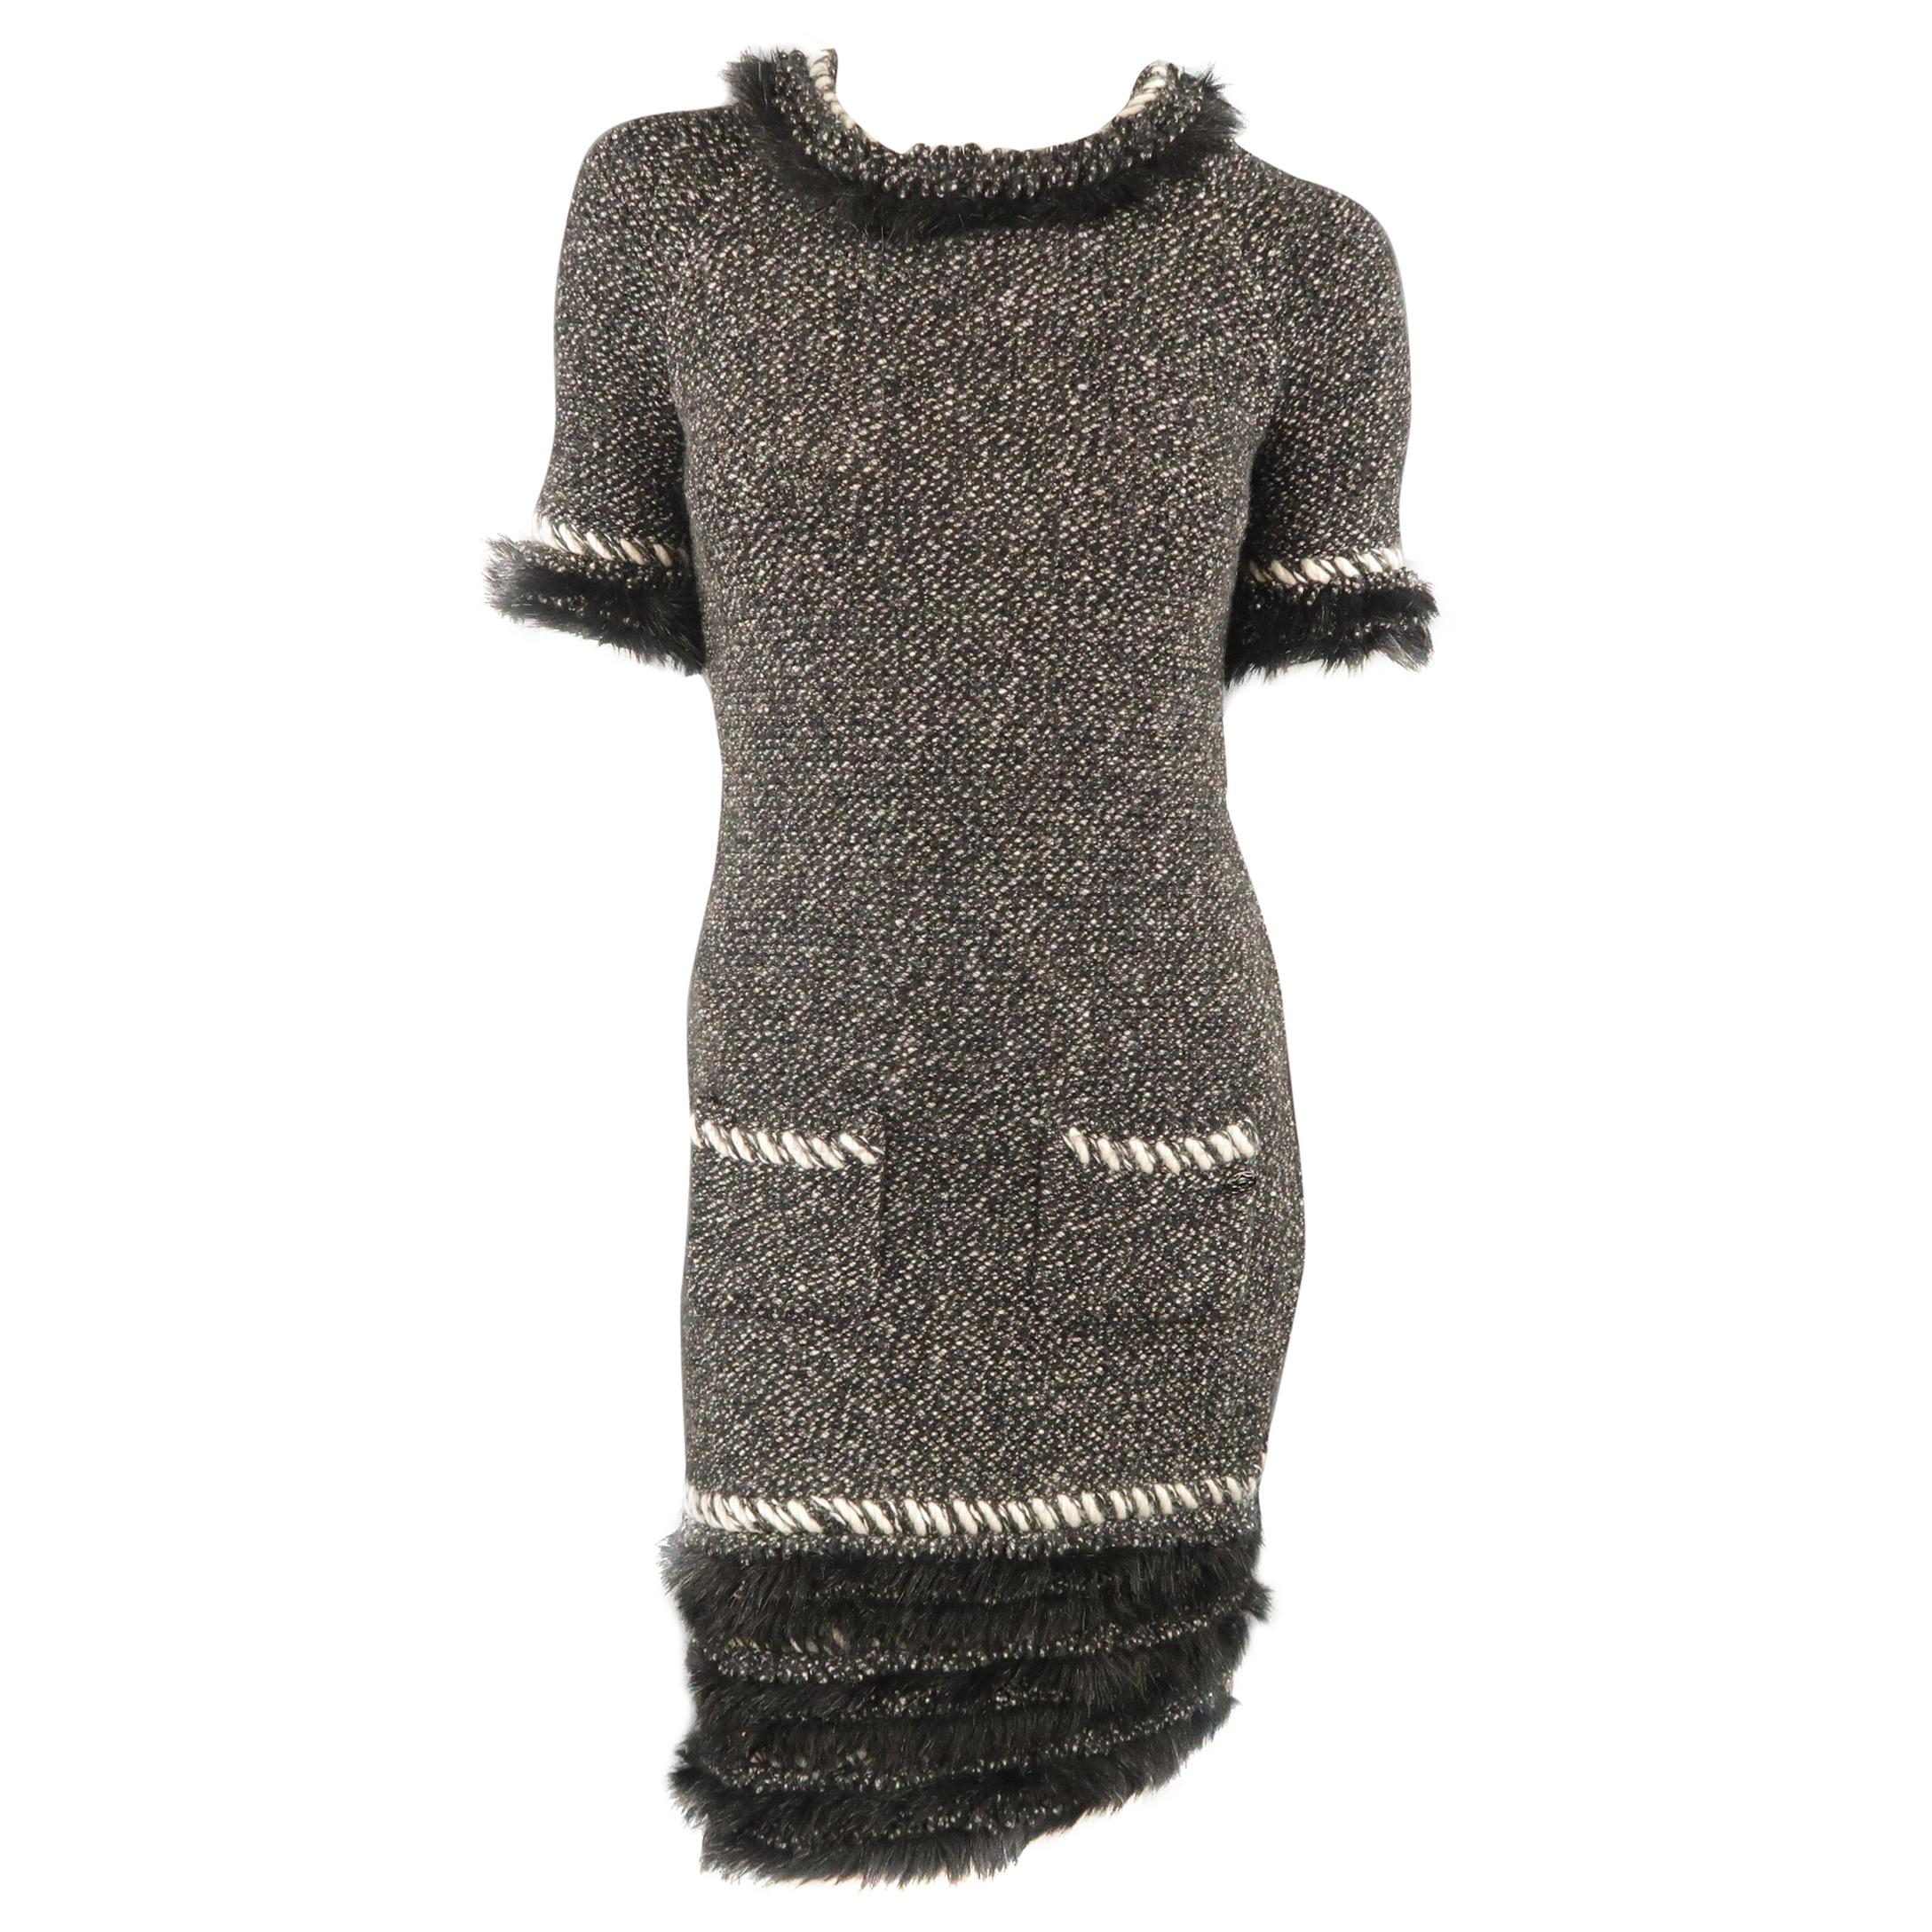 CHANEL Dress - F/W 2010 - Size 2 Black & Cream Cashmere, Woven Tweed Fur Trim